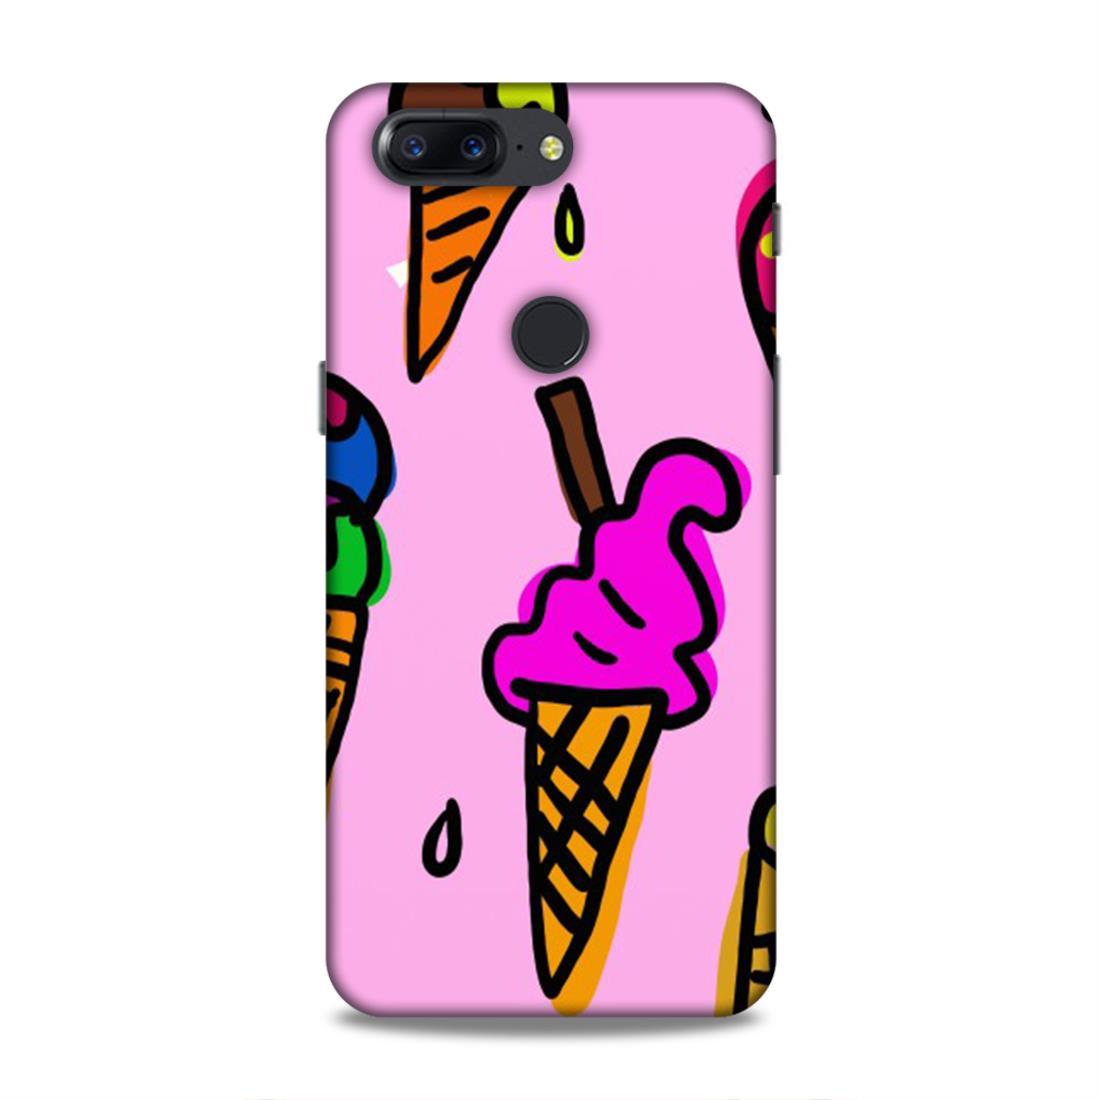 Icecream Pink OnePlus 5T Phone Cover